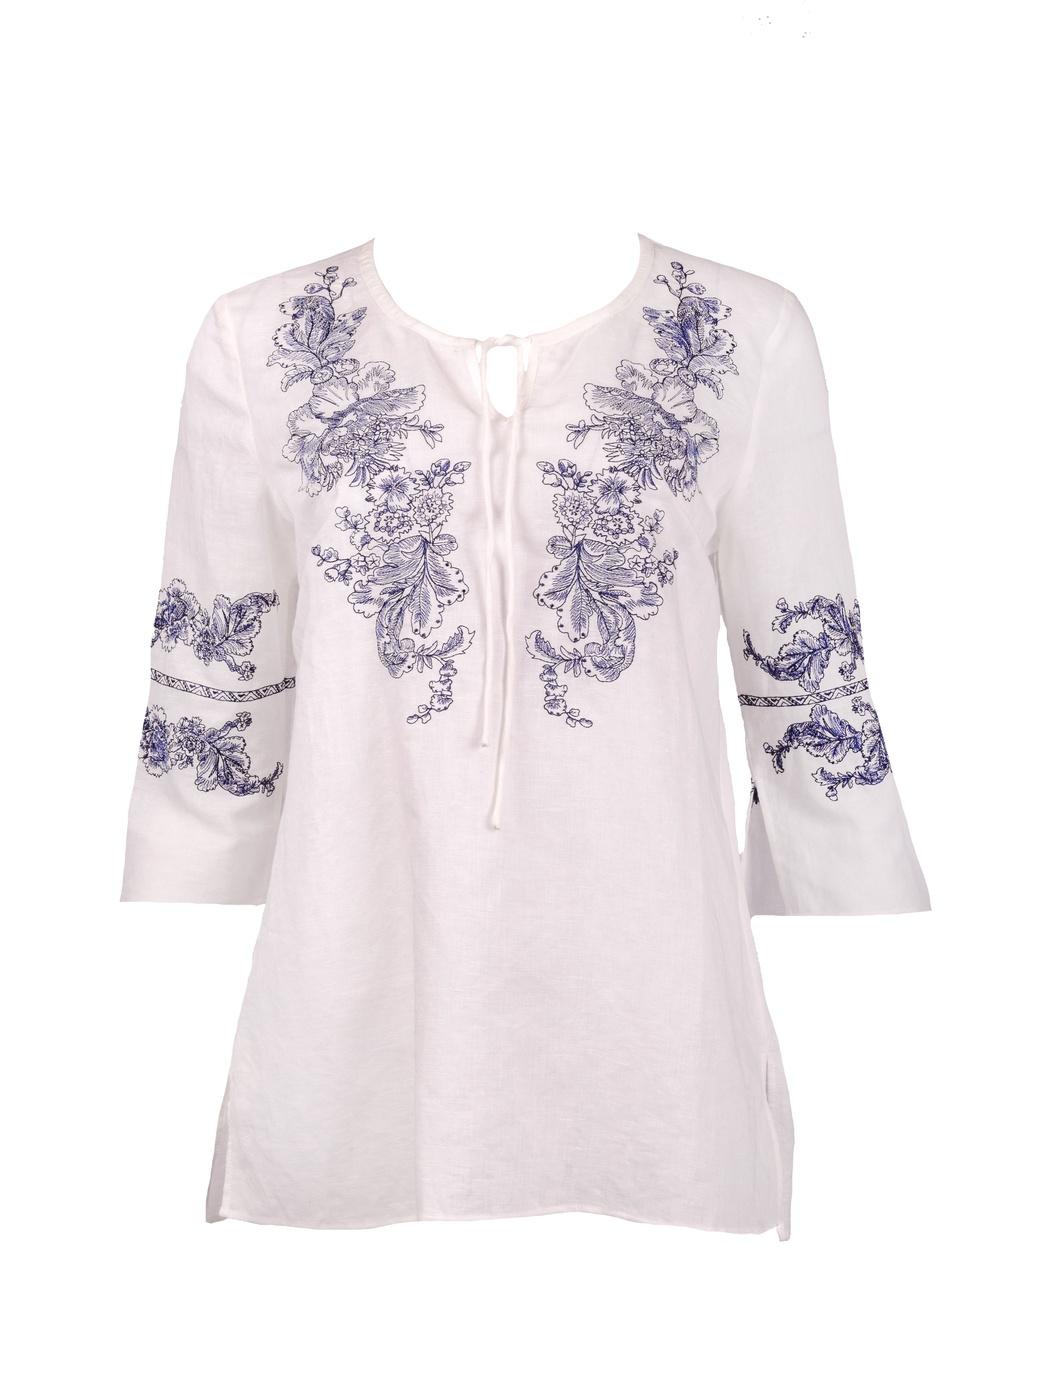 Блуза Devernois с вышивкой 71246003, белый фото